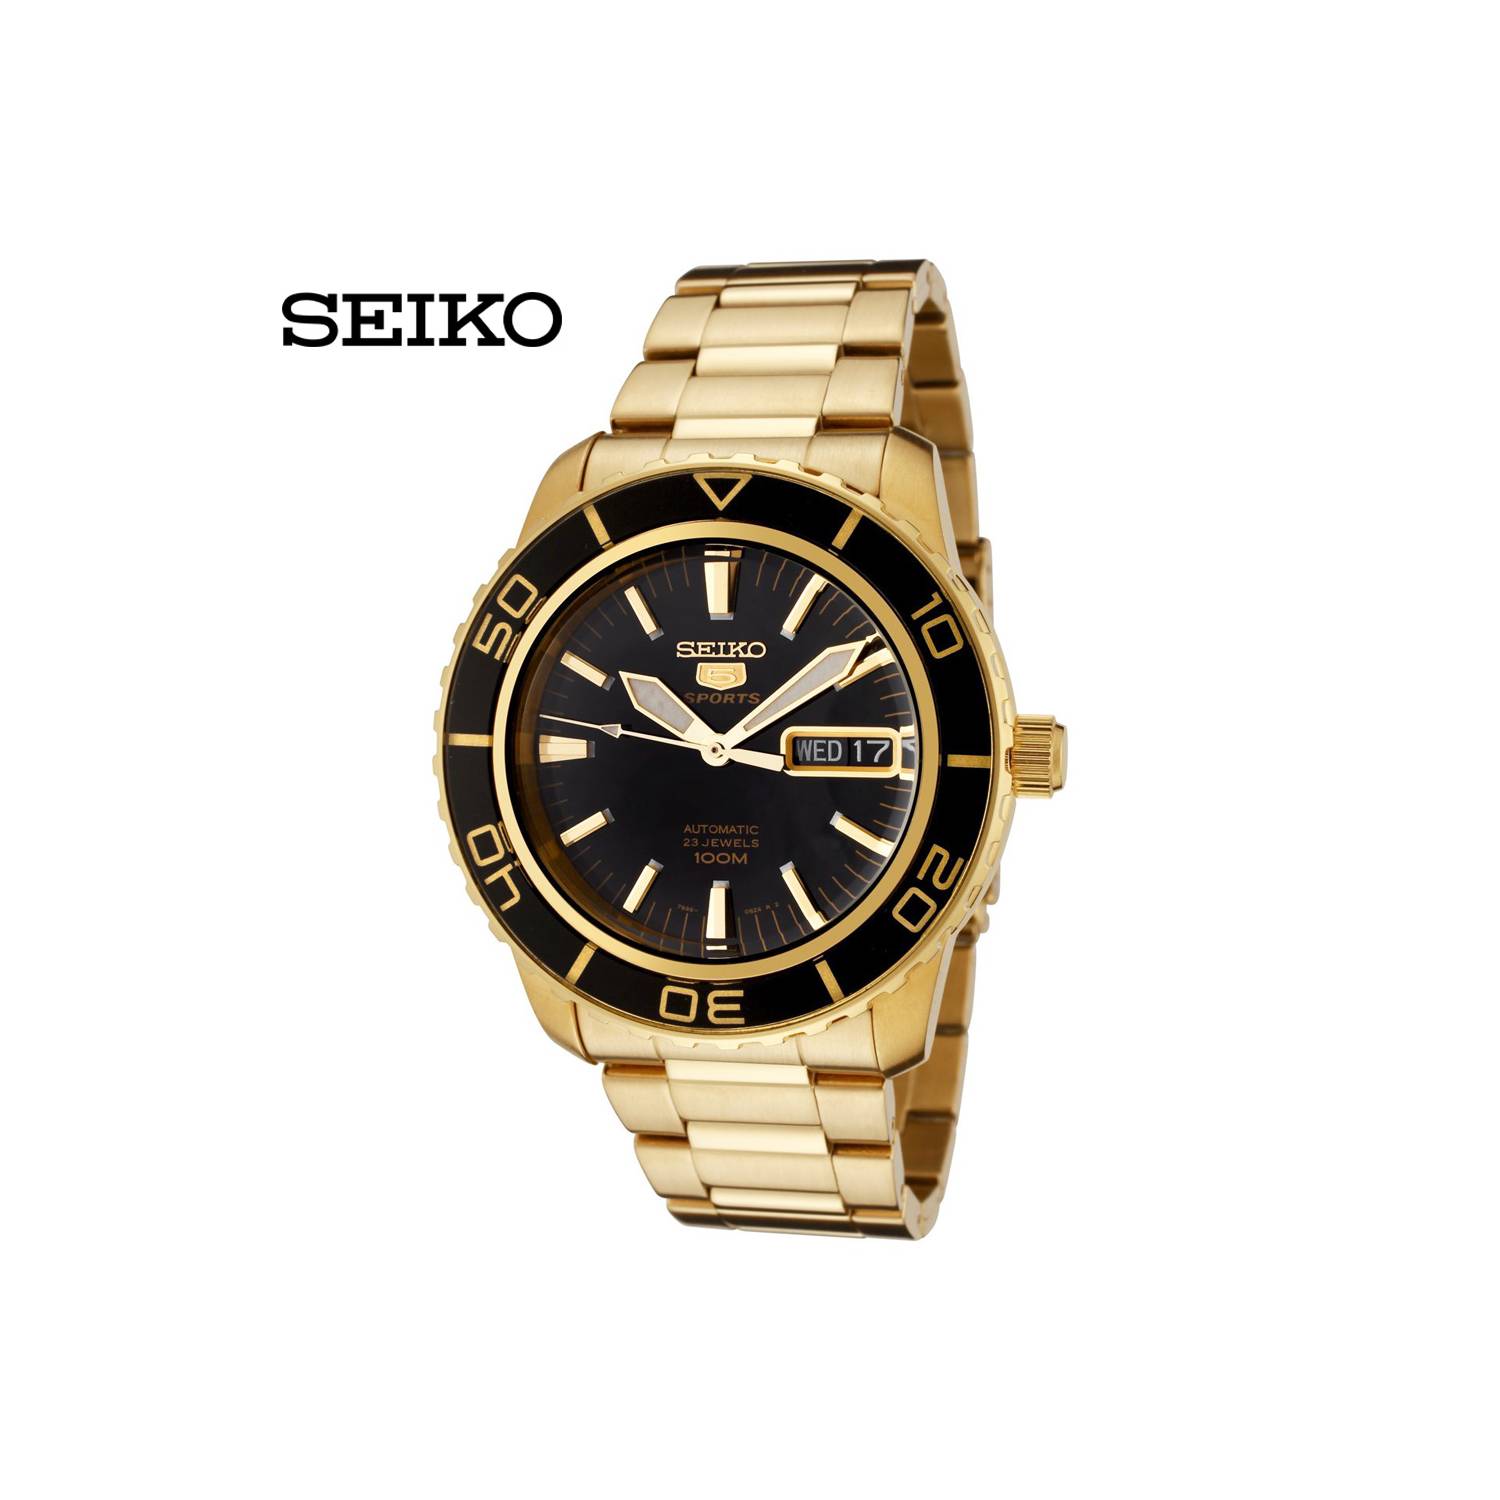 Reloj Seiko 5 SNKP14 Automático Para Hombre Fecha Acero Inoxidable -  Plateado Dorado